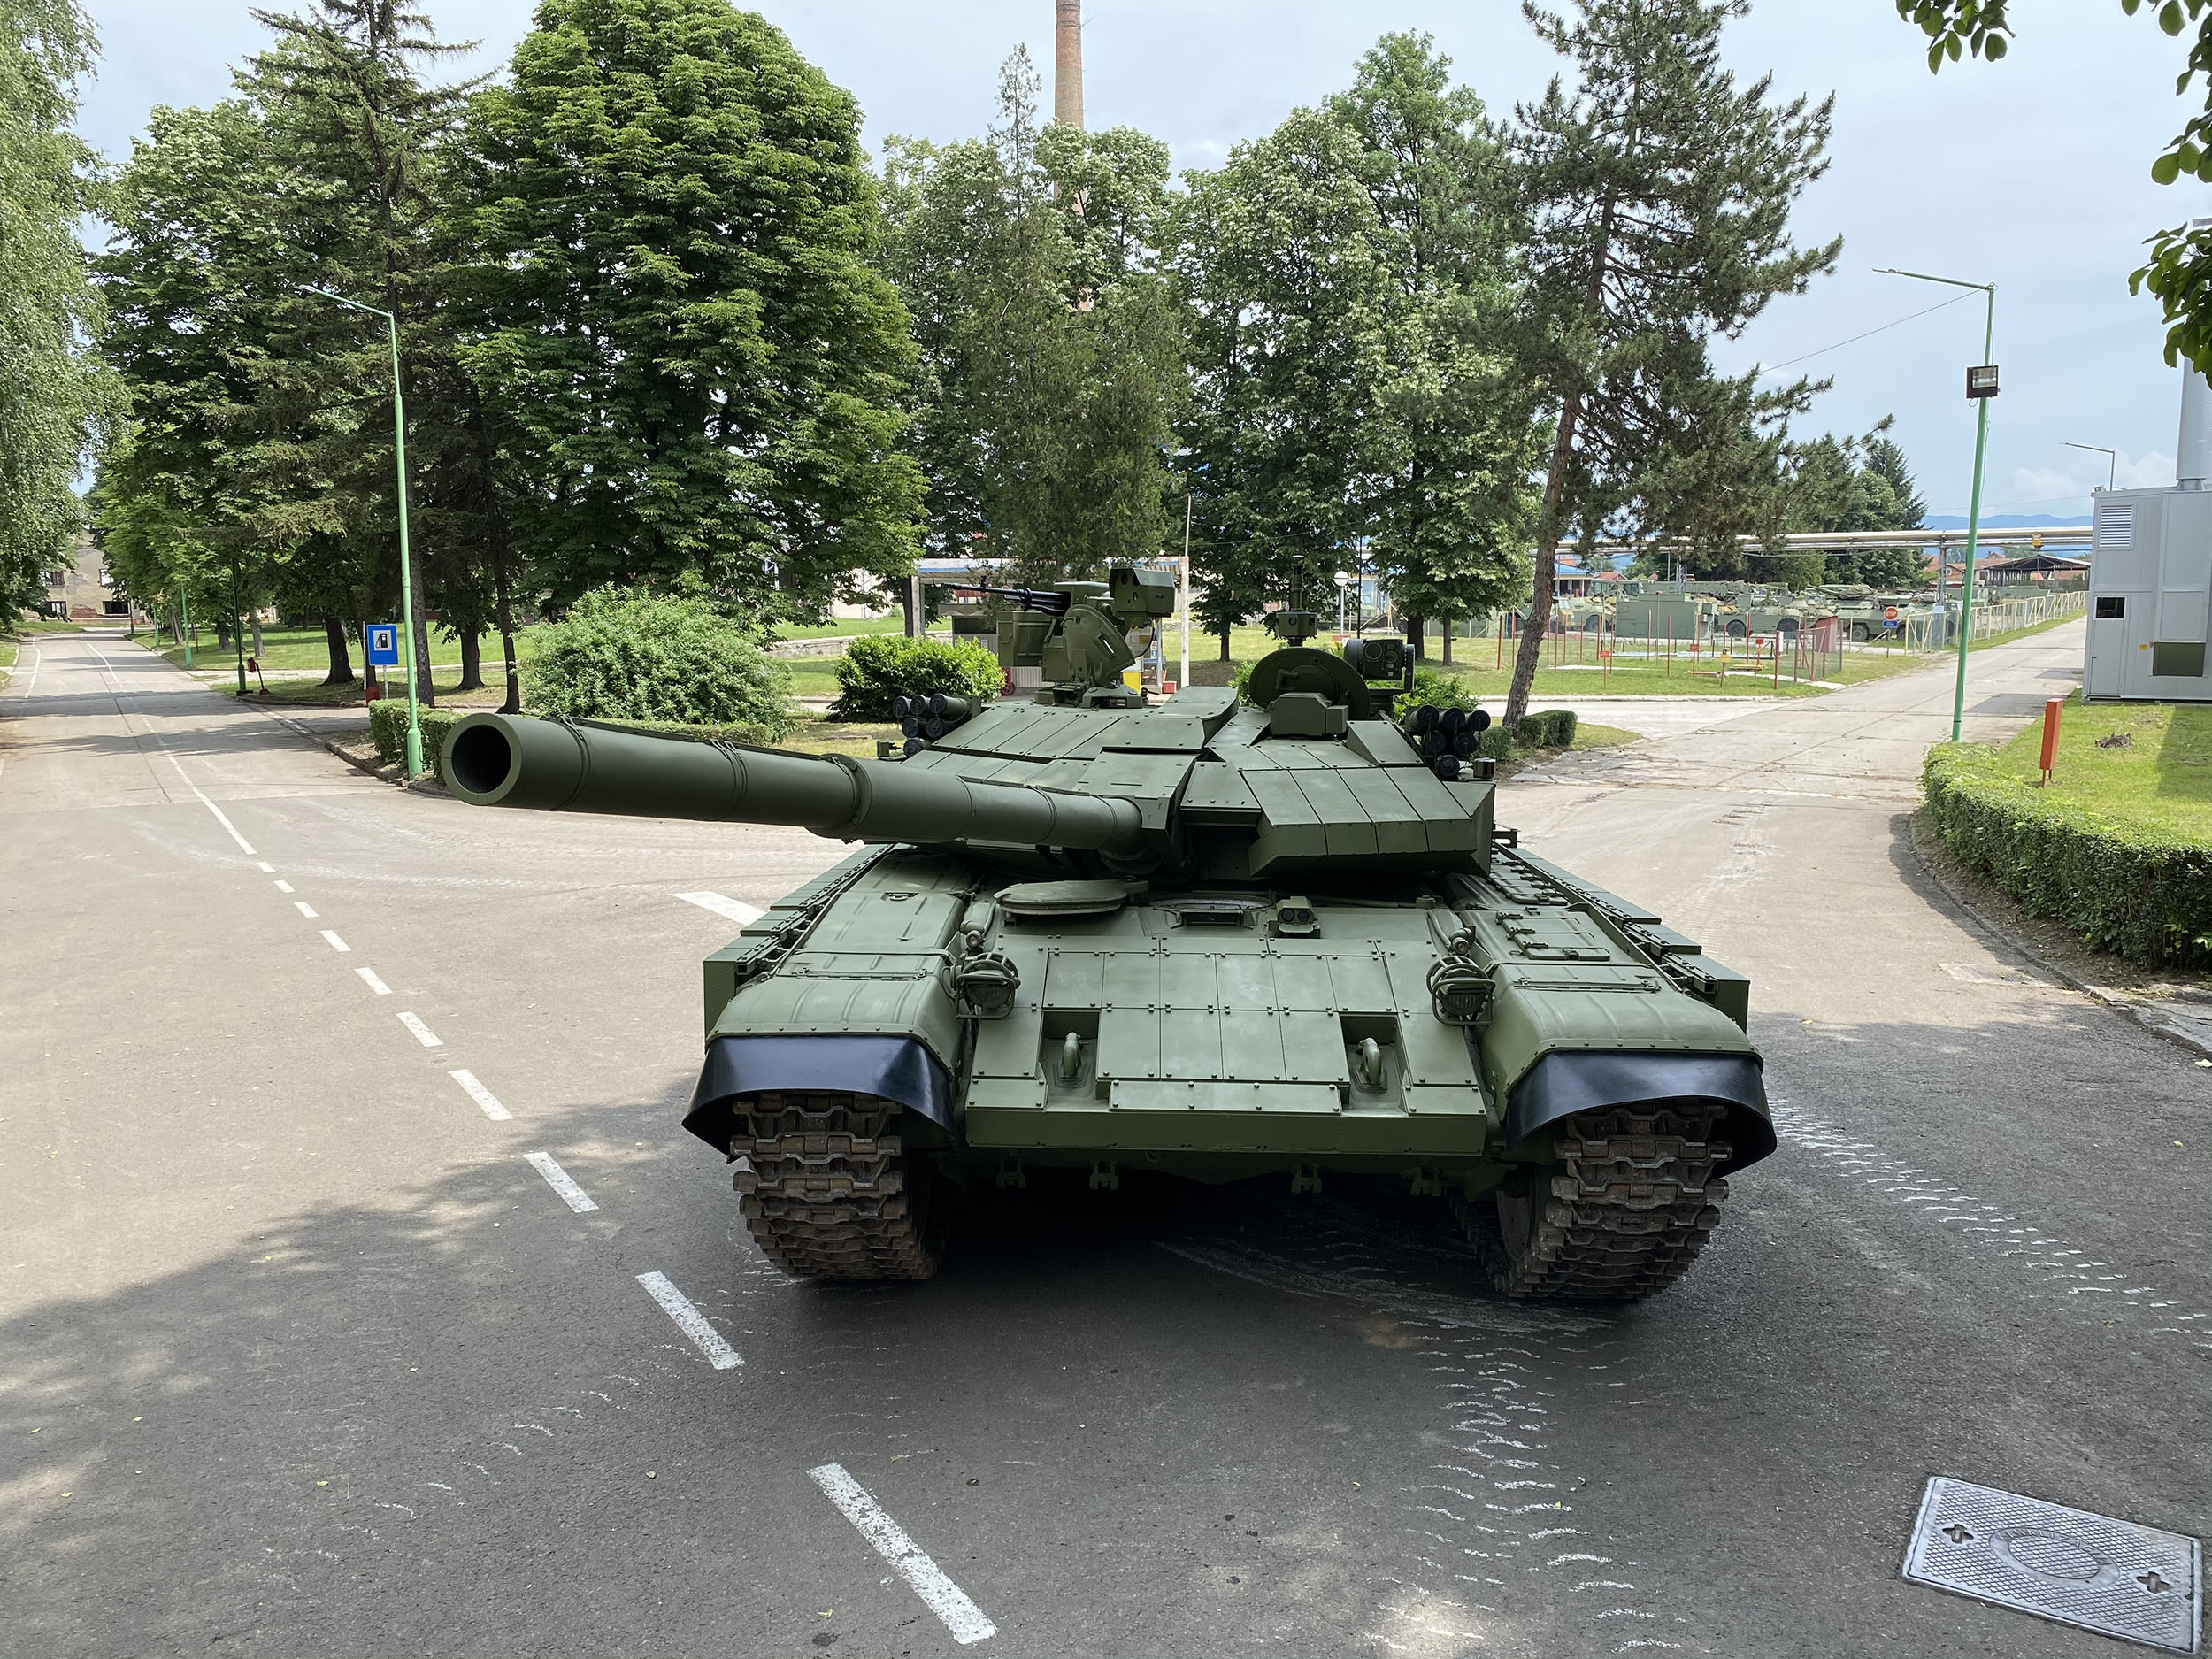  Serbia Army M-84 AS1 Main Battle Tanks